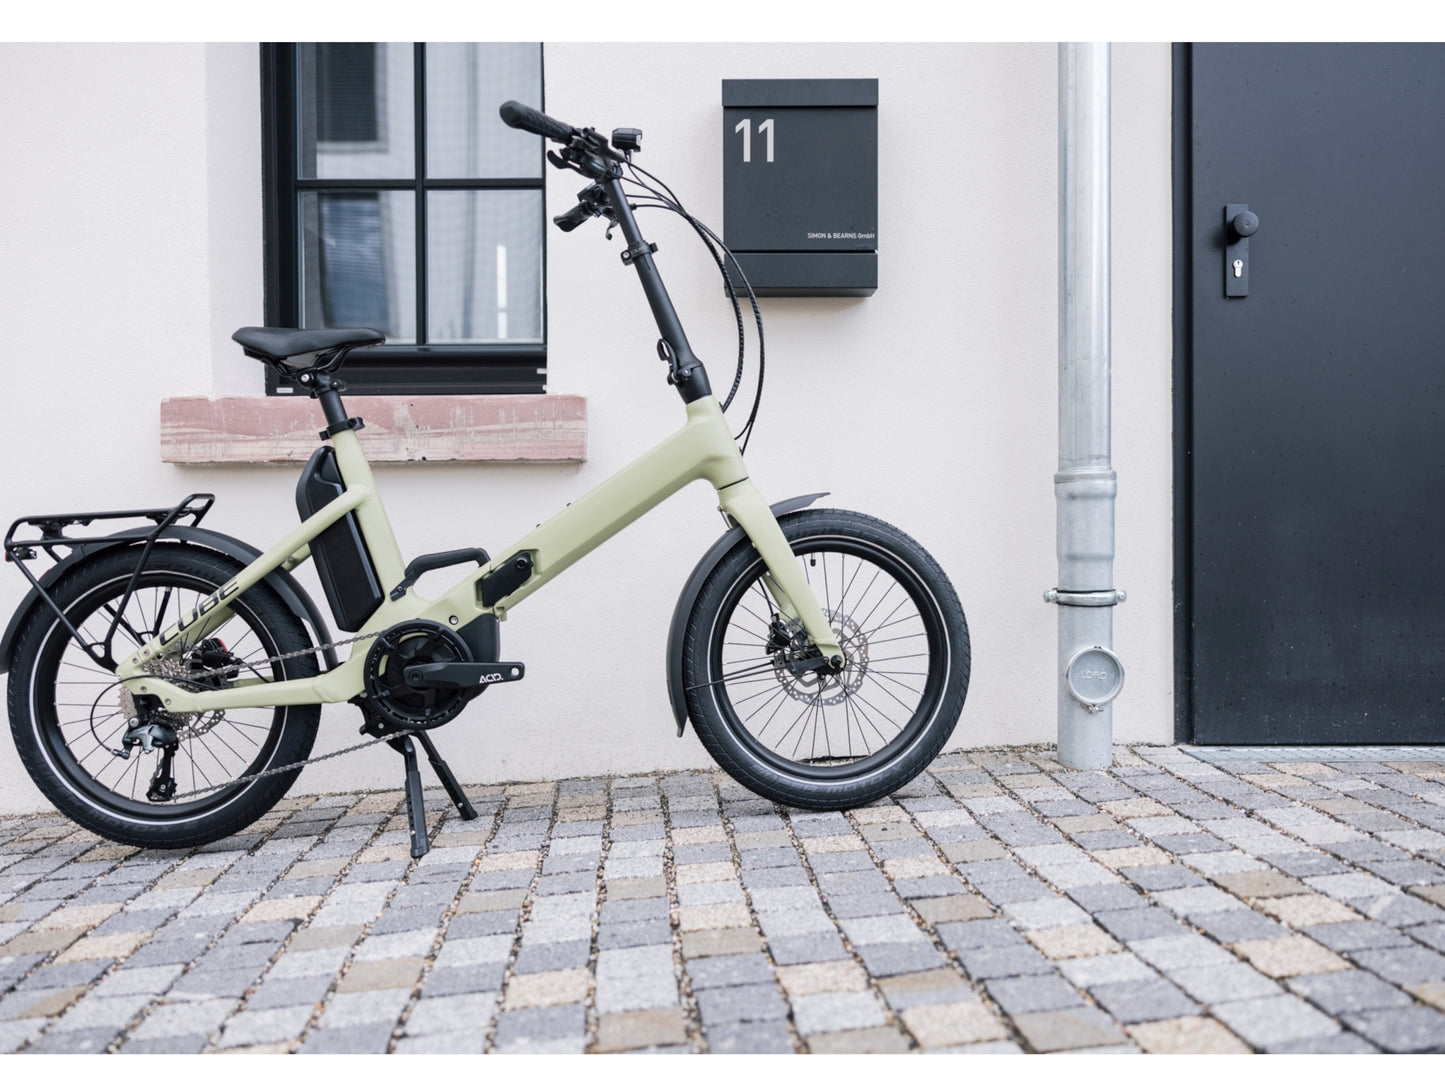 Cube Fold Sport Hybrid 500 electric bike green n black side profile business suite door in background